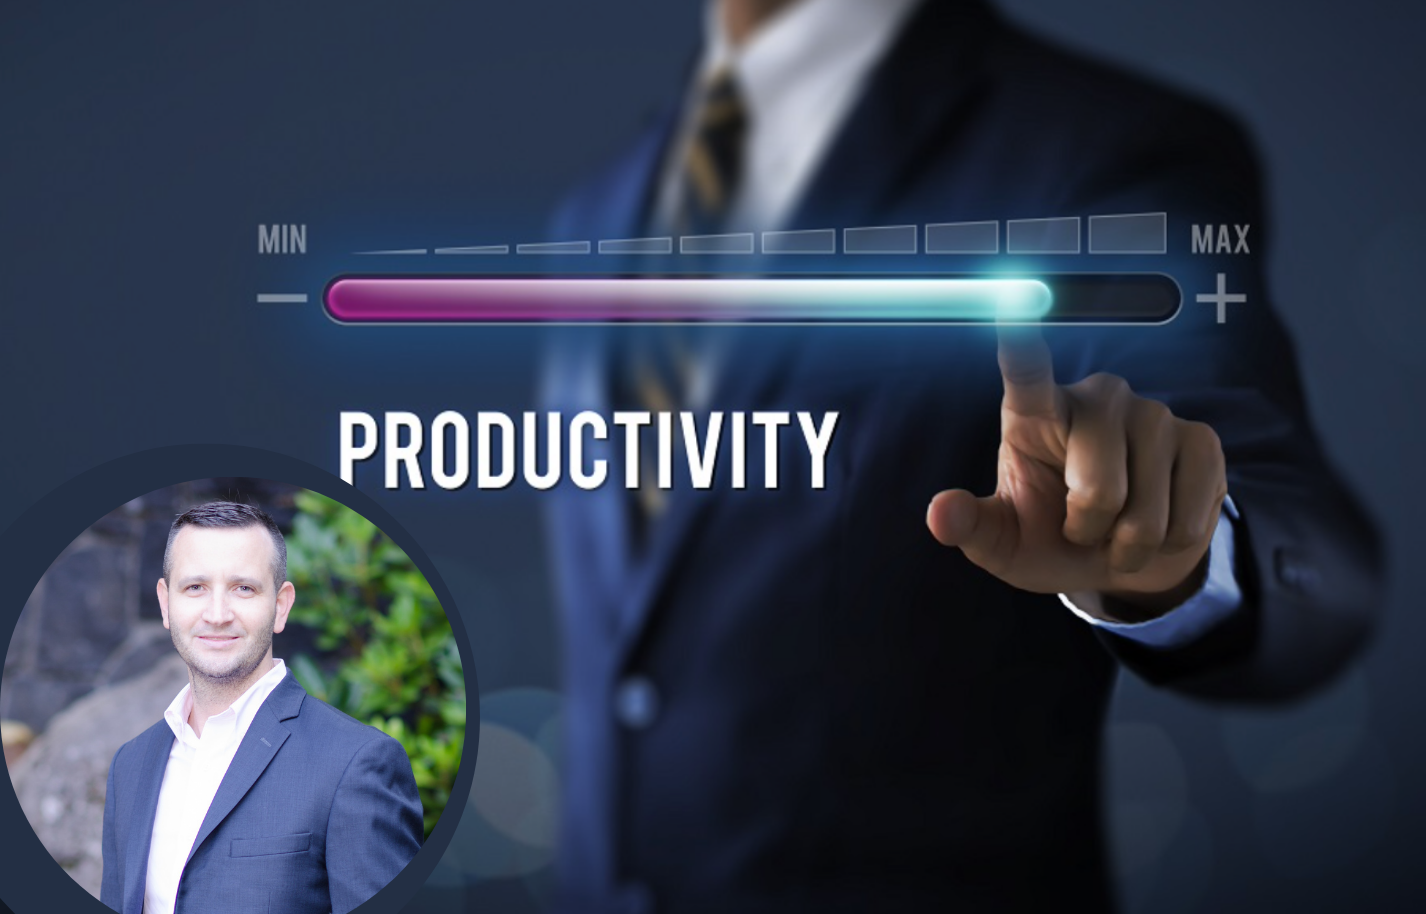 Joseph Jedlowski Spills His Best Business Productivity Hacks To Maximize Your Potential